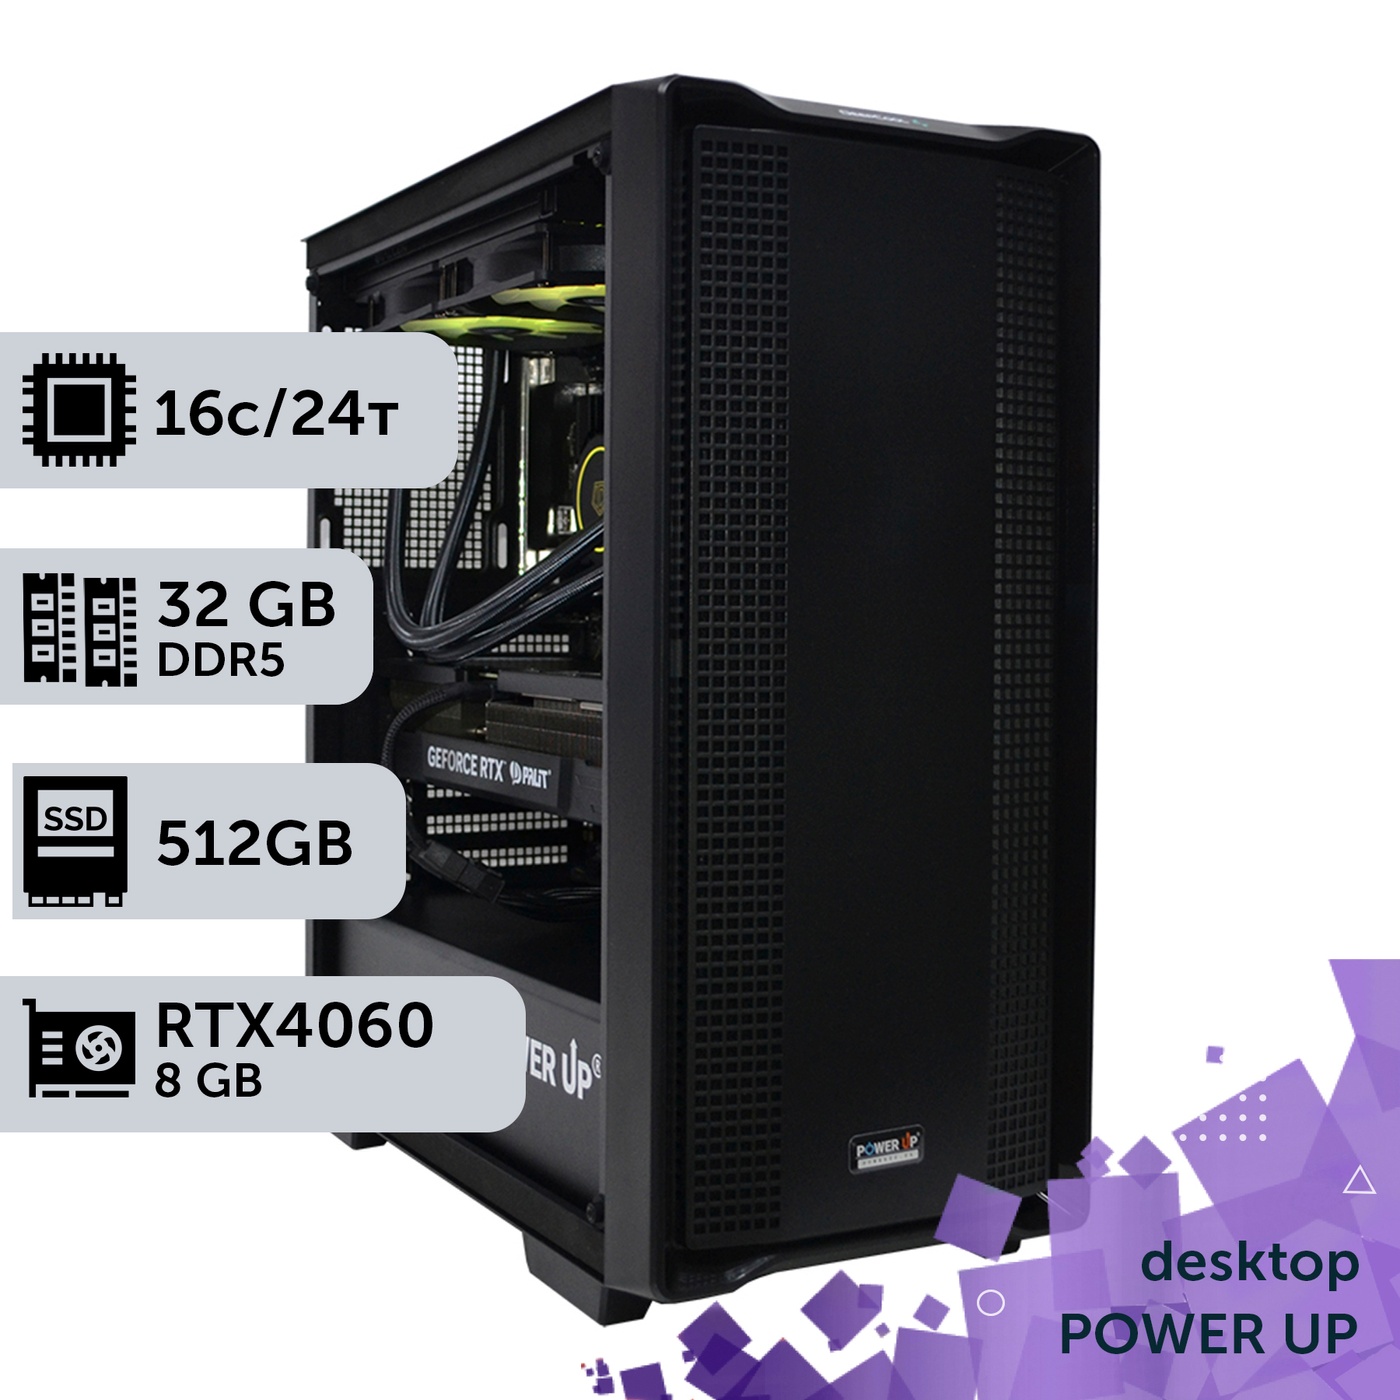 Рабочая станция PowerUp Desktop #258 Core i7 13700K/32 GB/SSD 512GB/GeForce RTX 4060 8GB